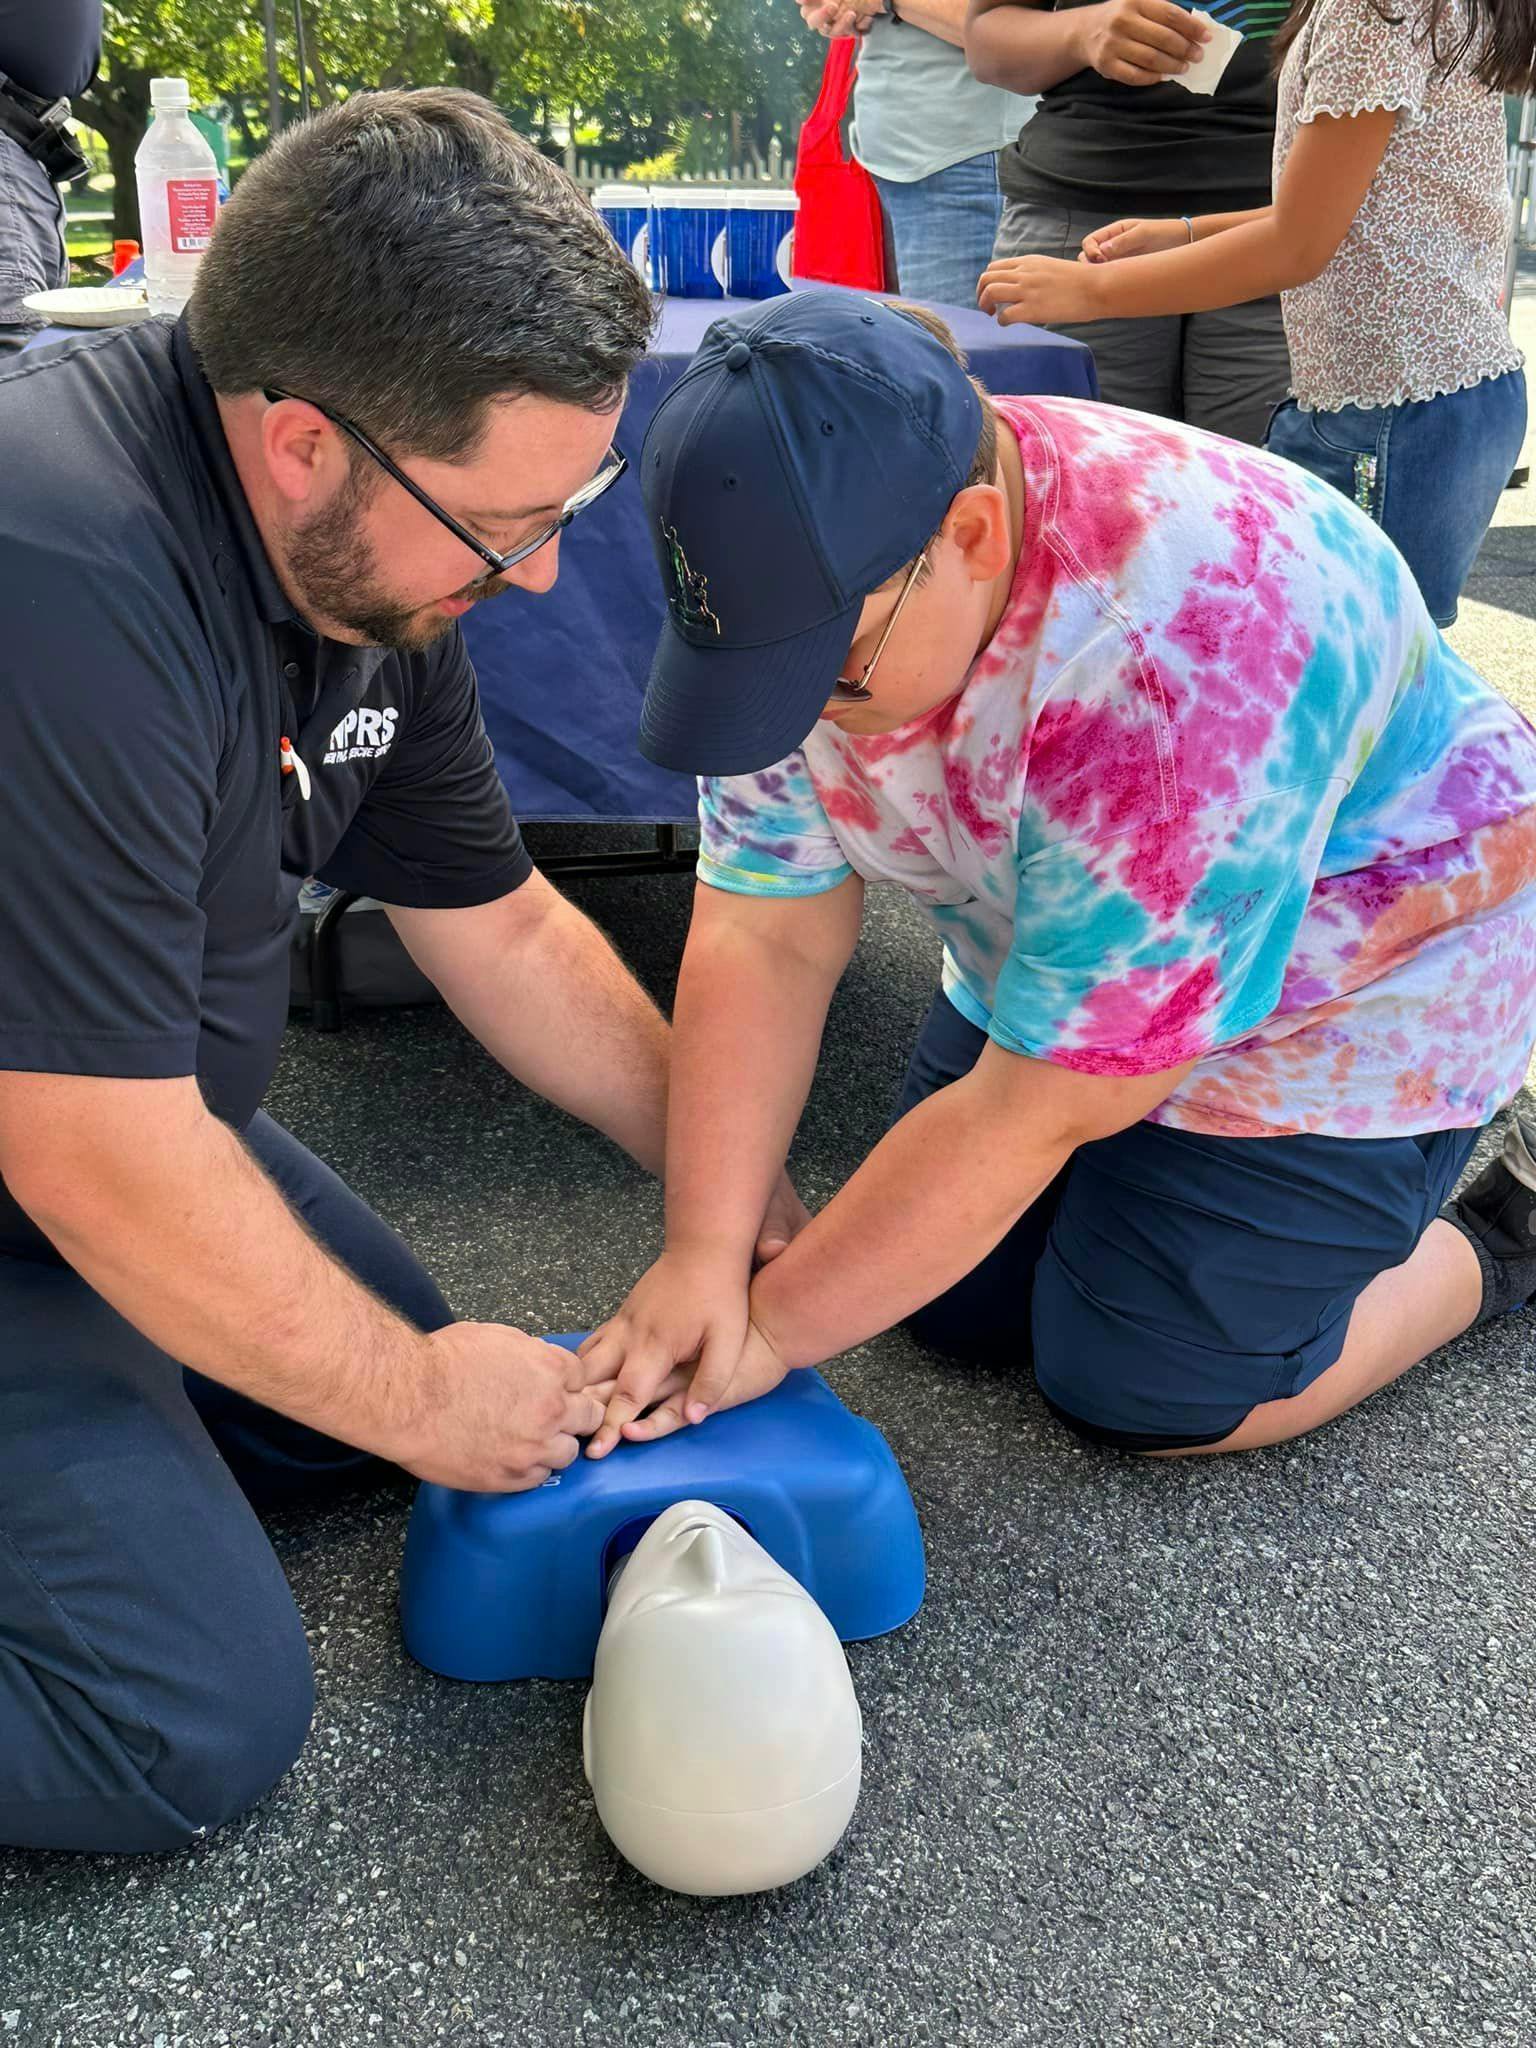 CPR training